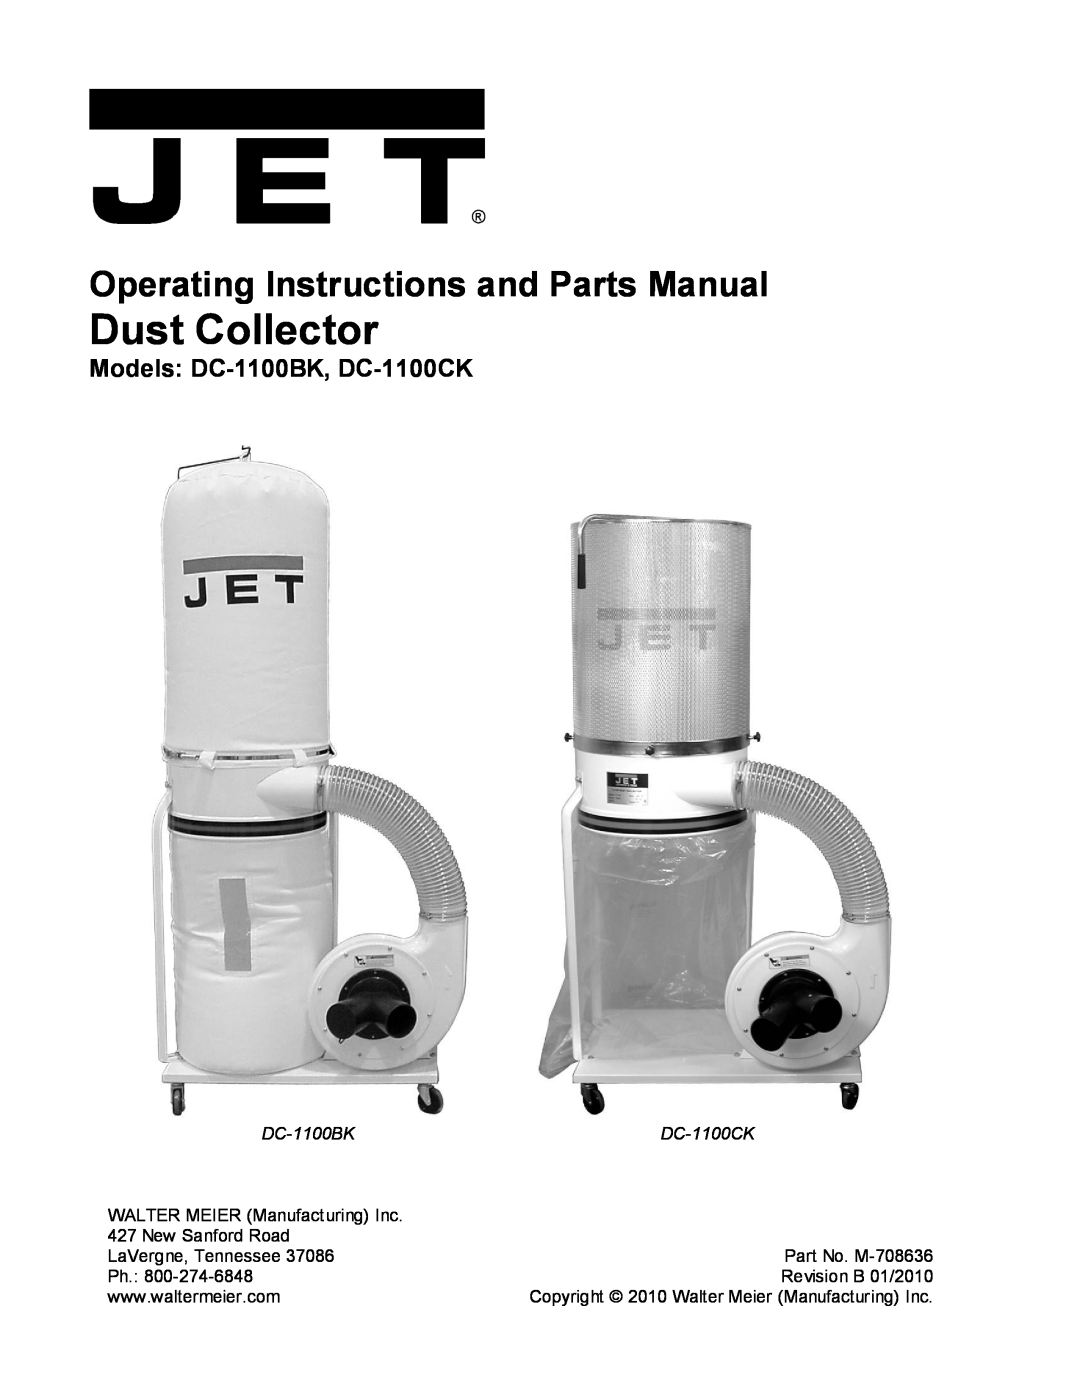 Jet Tools operating instructions Models DC-1100BK, DC-1100CK, WALTER MEIER Manufacturing Inc, New Sanford Road 